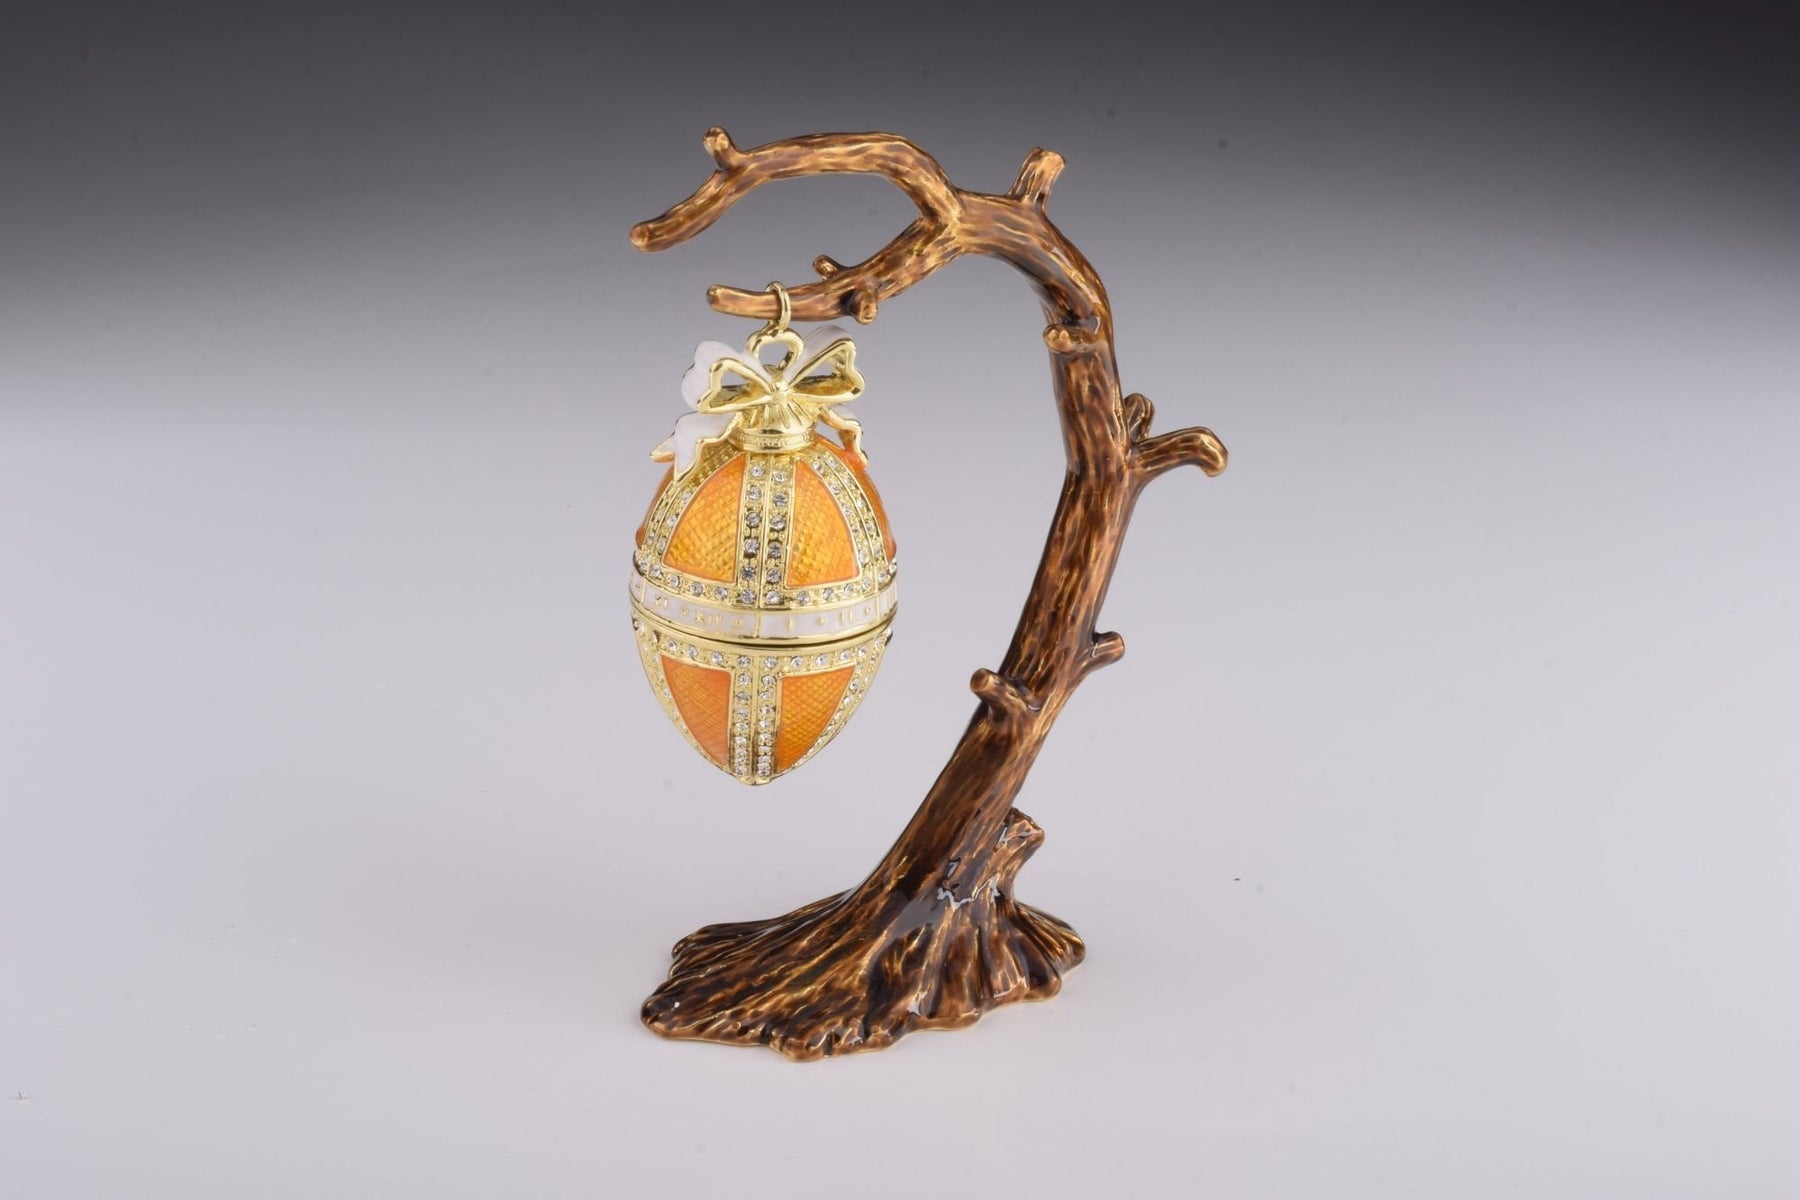 Orange Russian Egg Hanging of a Tree Branch Faberge Egg Keren Kopal